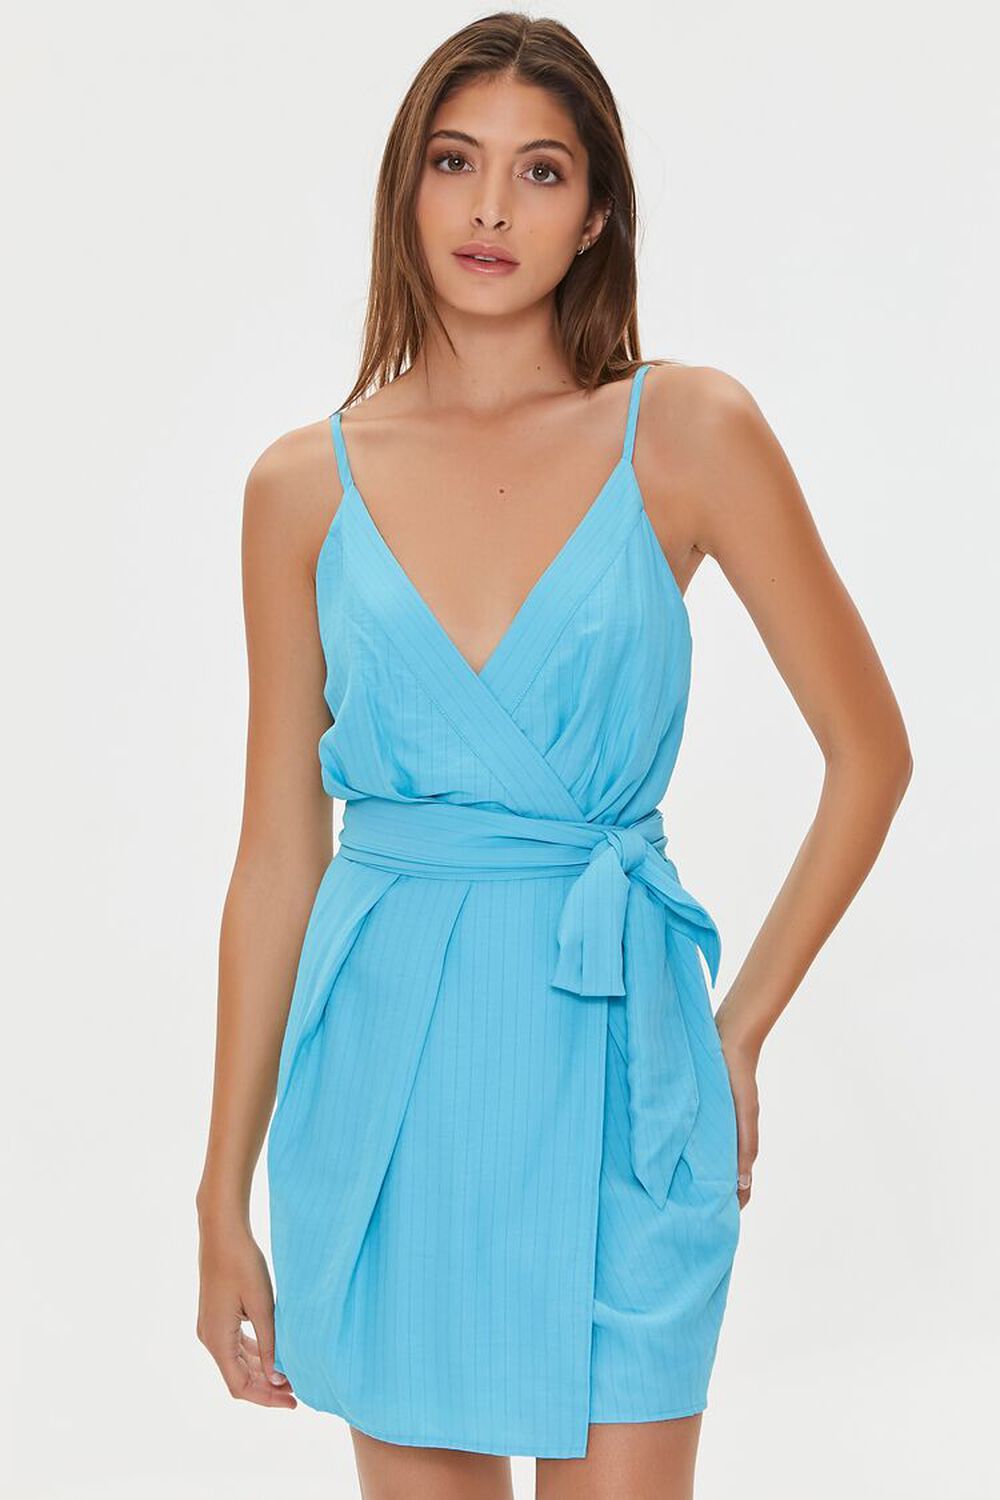 LATIGO BAY Tie-Waist Cami Mini Dress, image 1